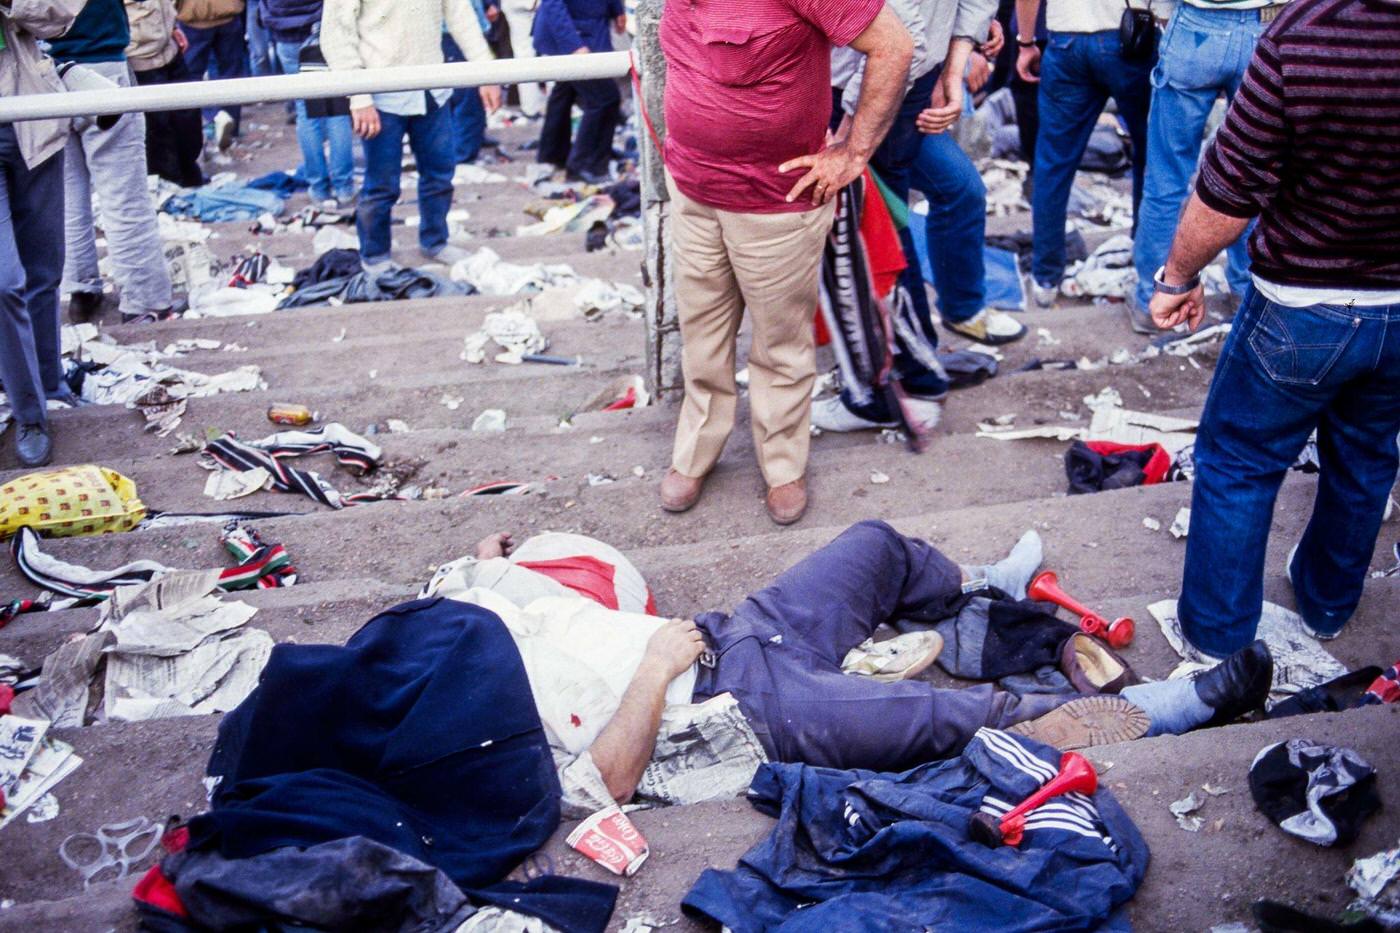 Bodies litter ground after Heysel Stadium riots, European Cup Final, 1985.